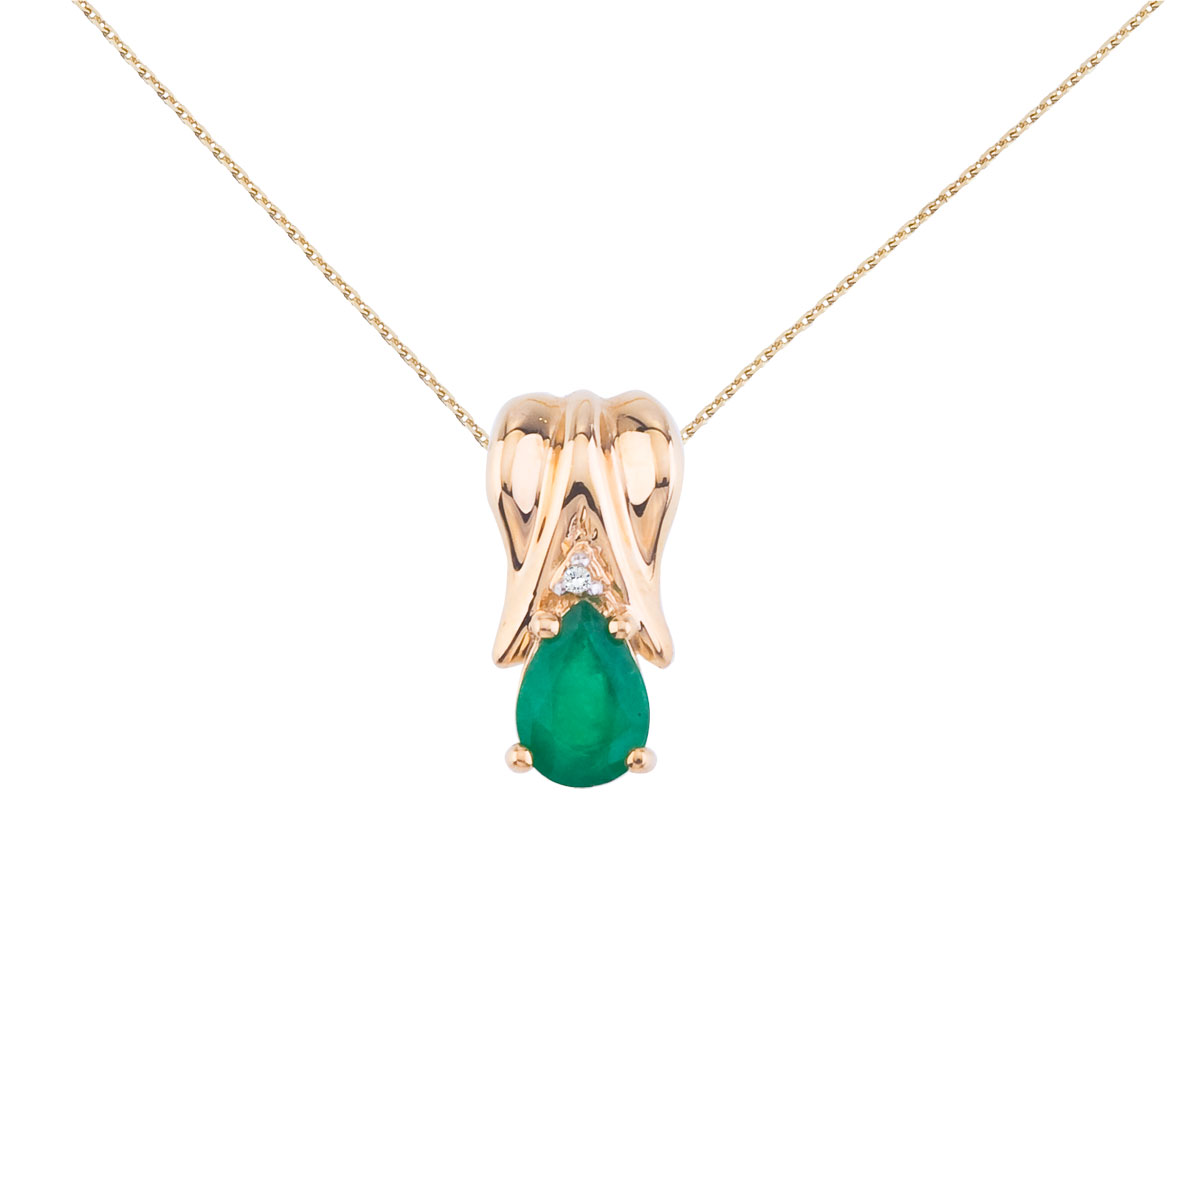 JCX2711: 7x5 mm natural emerald diamond accented pendant in 14k white gold.